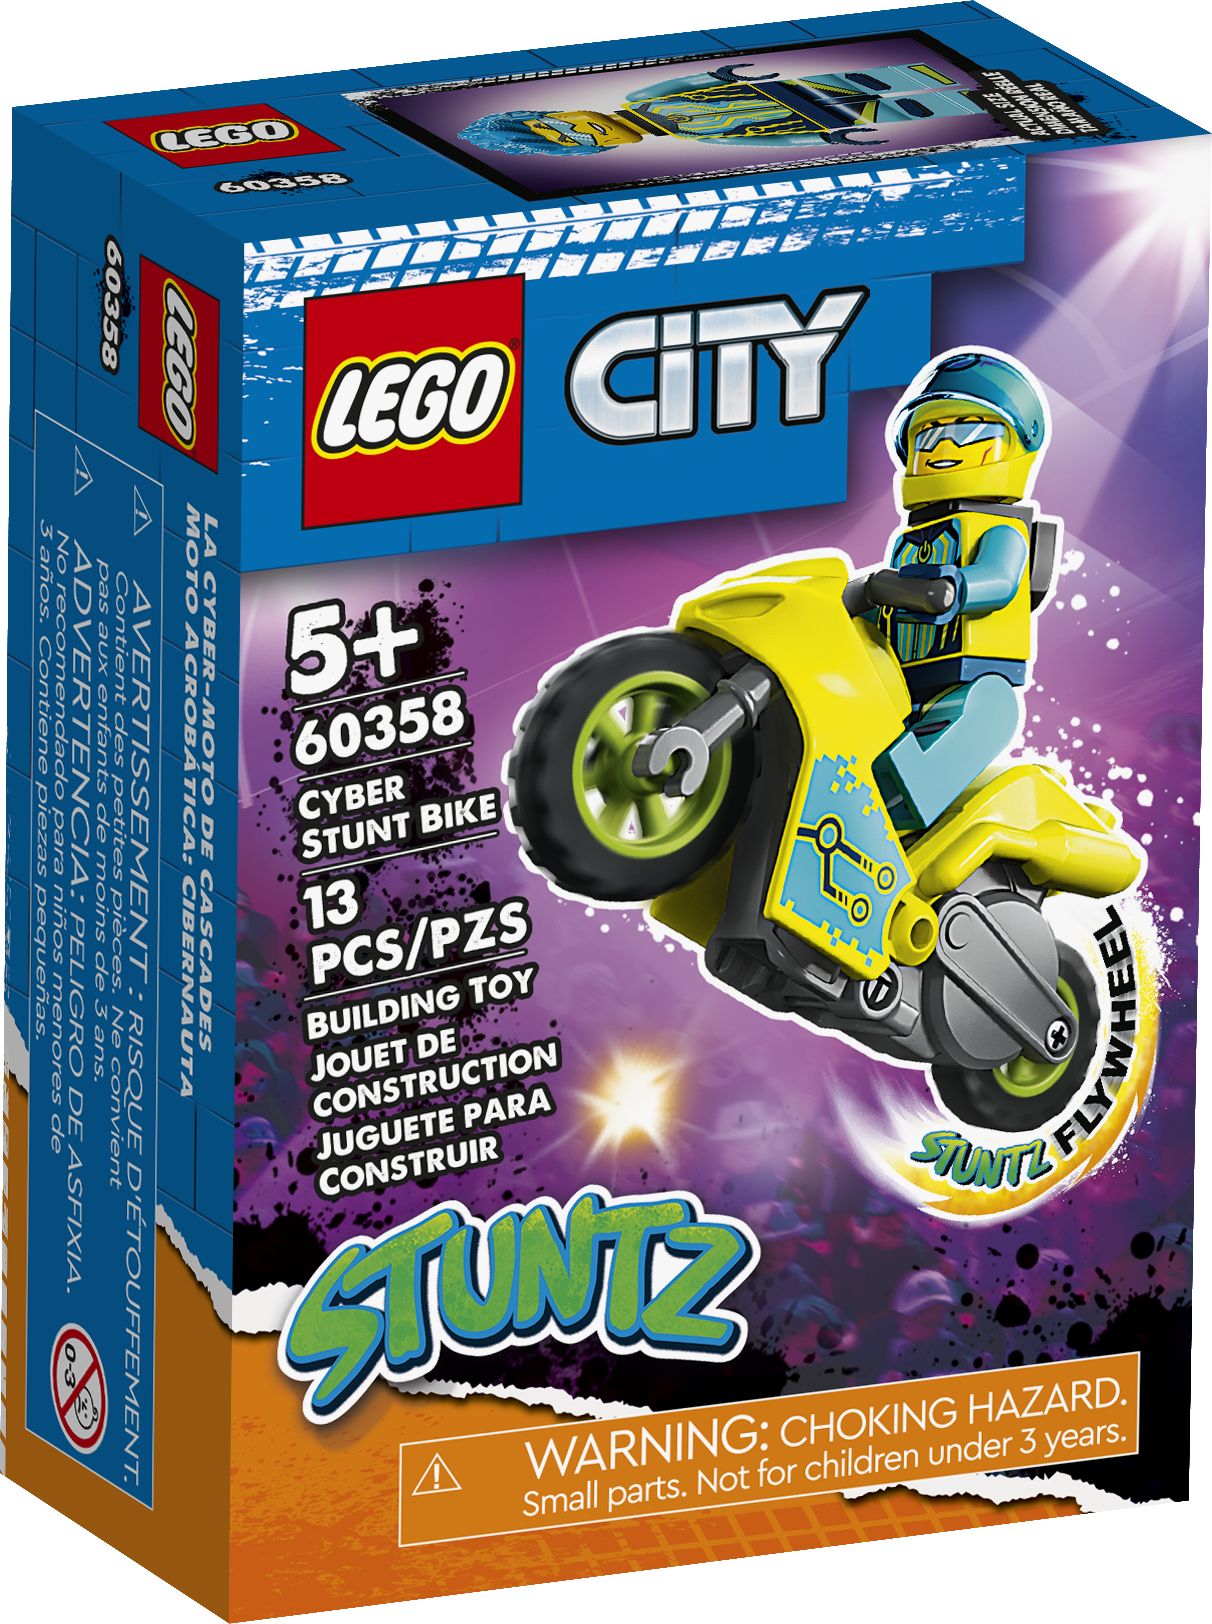 LEGO City 60358 Cyber-Stuntbike LEGO_60358_Box1_v39.jpg